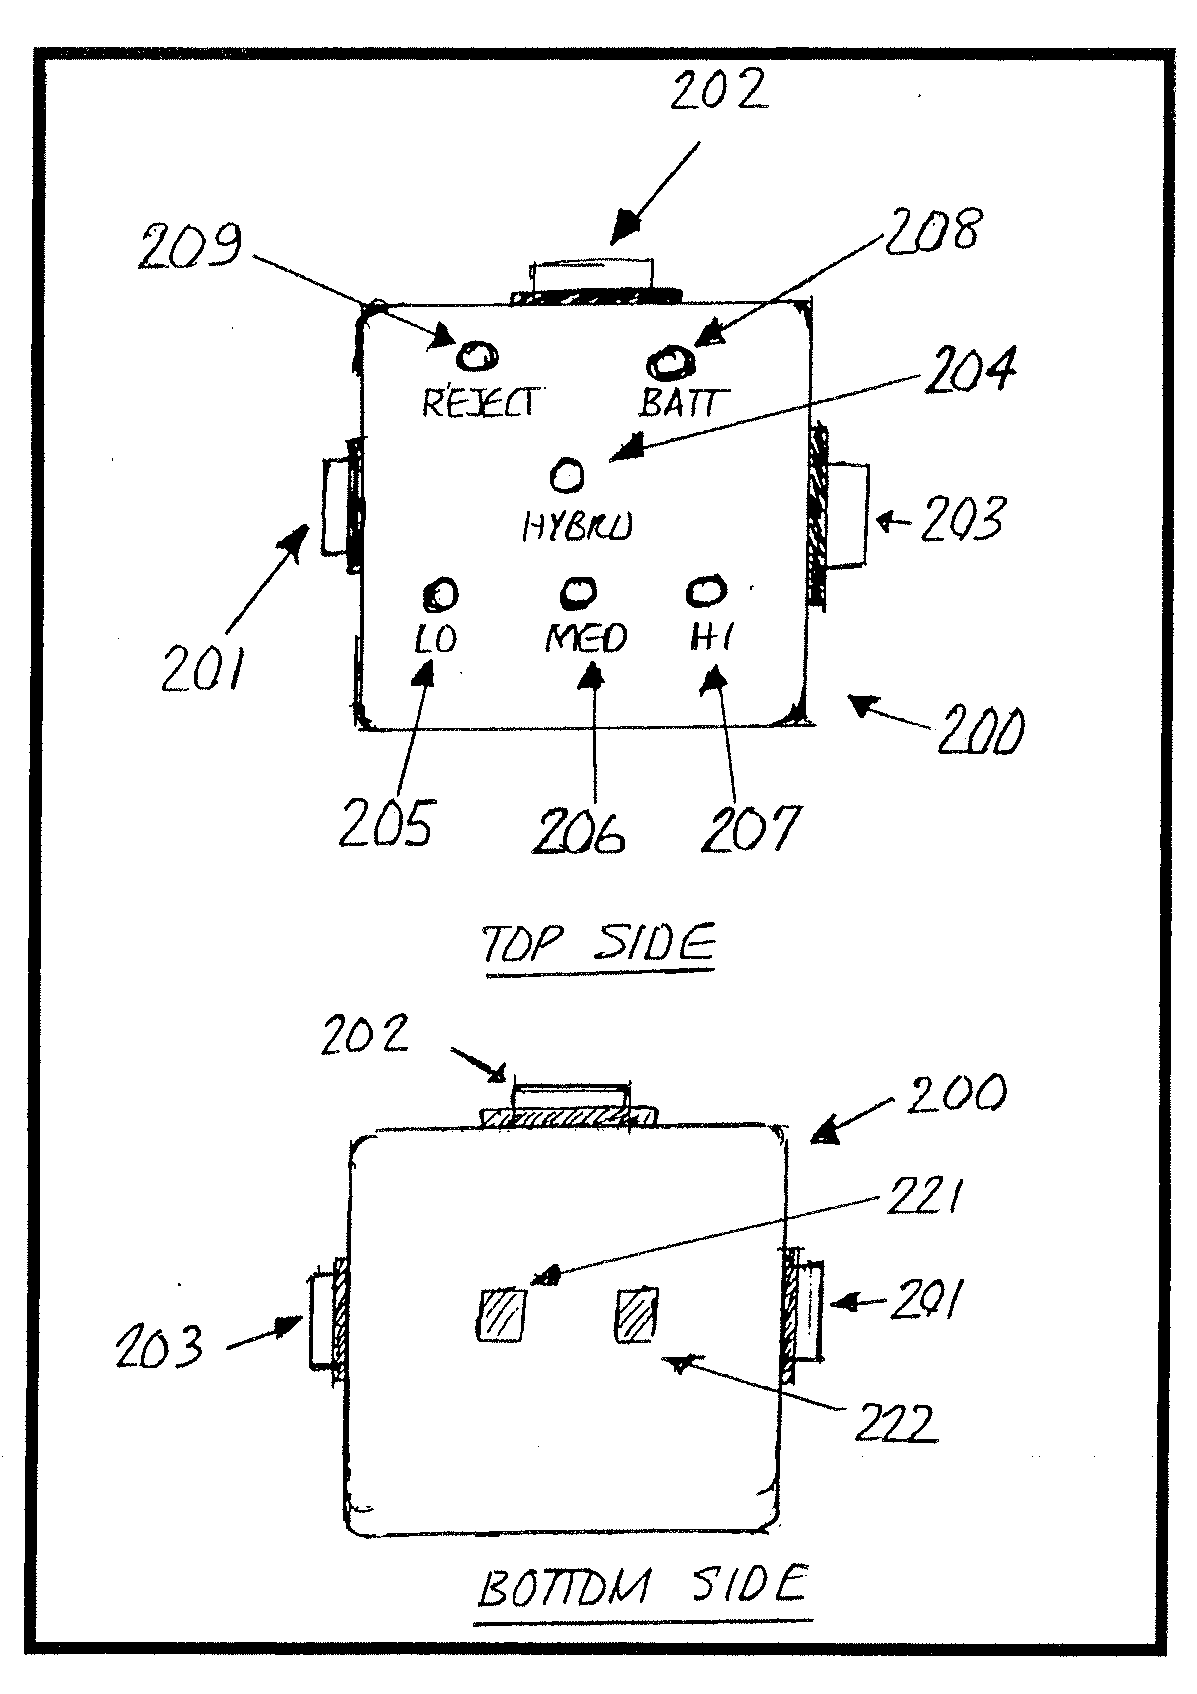 Iontophoresis apparatus and method